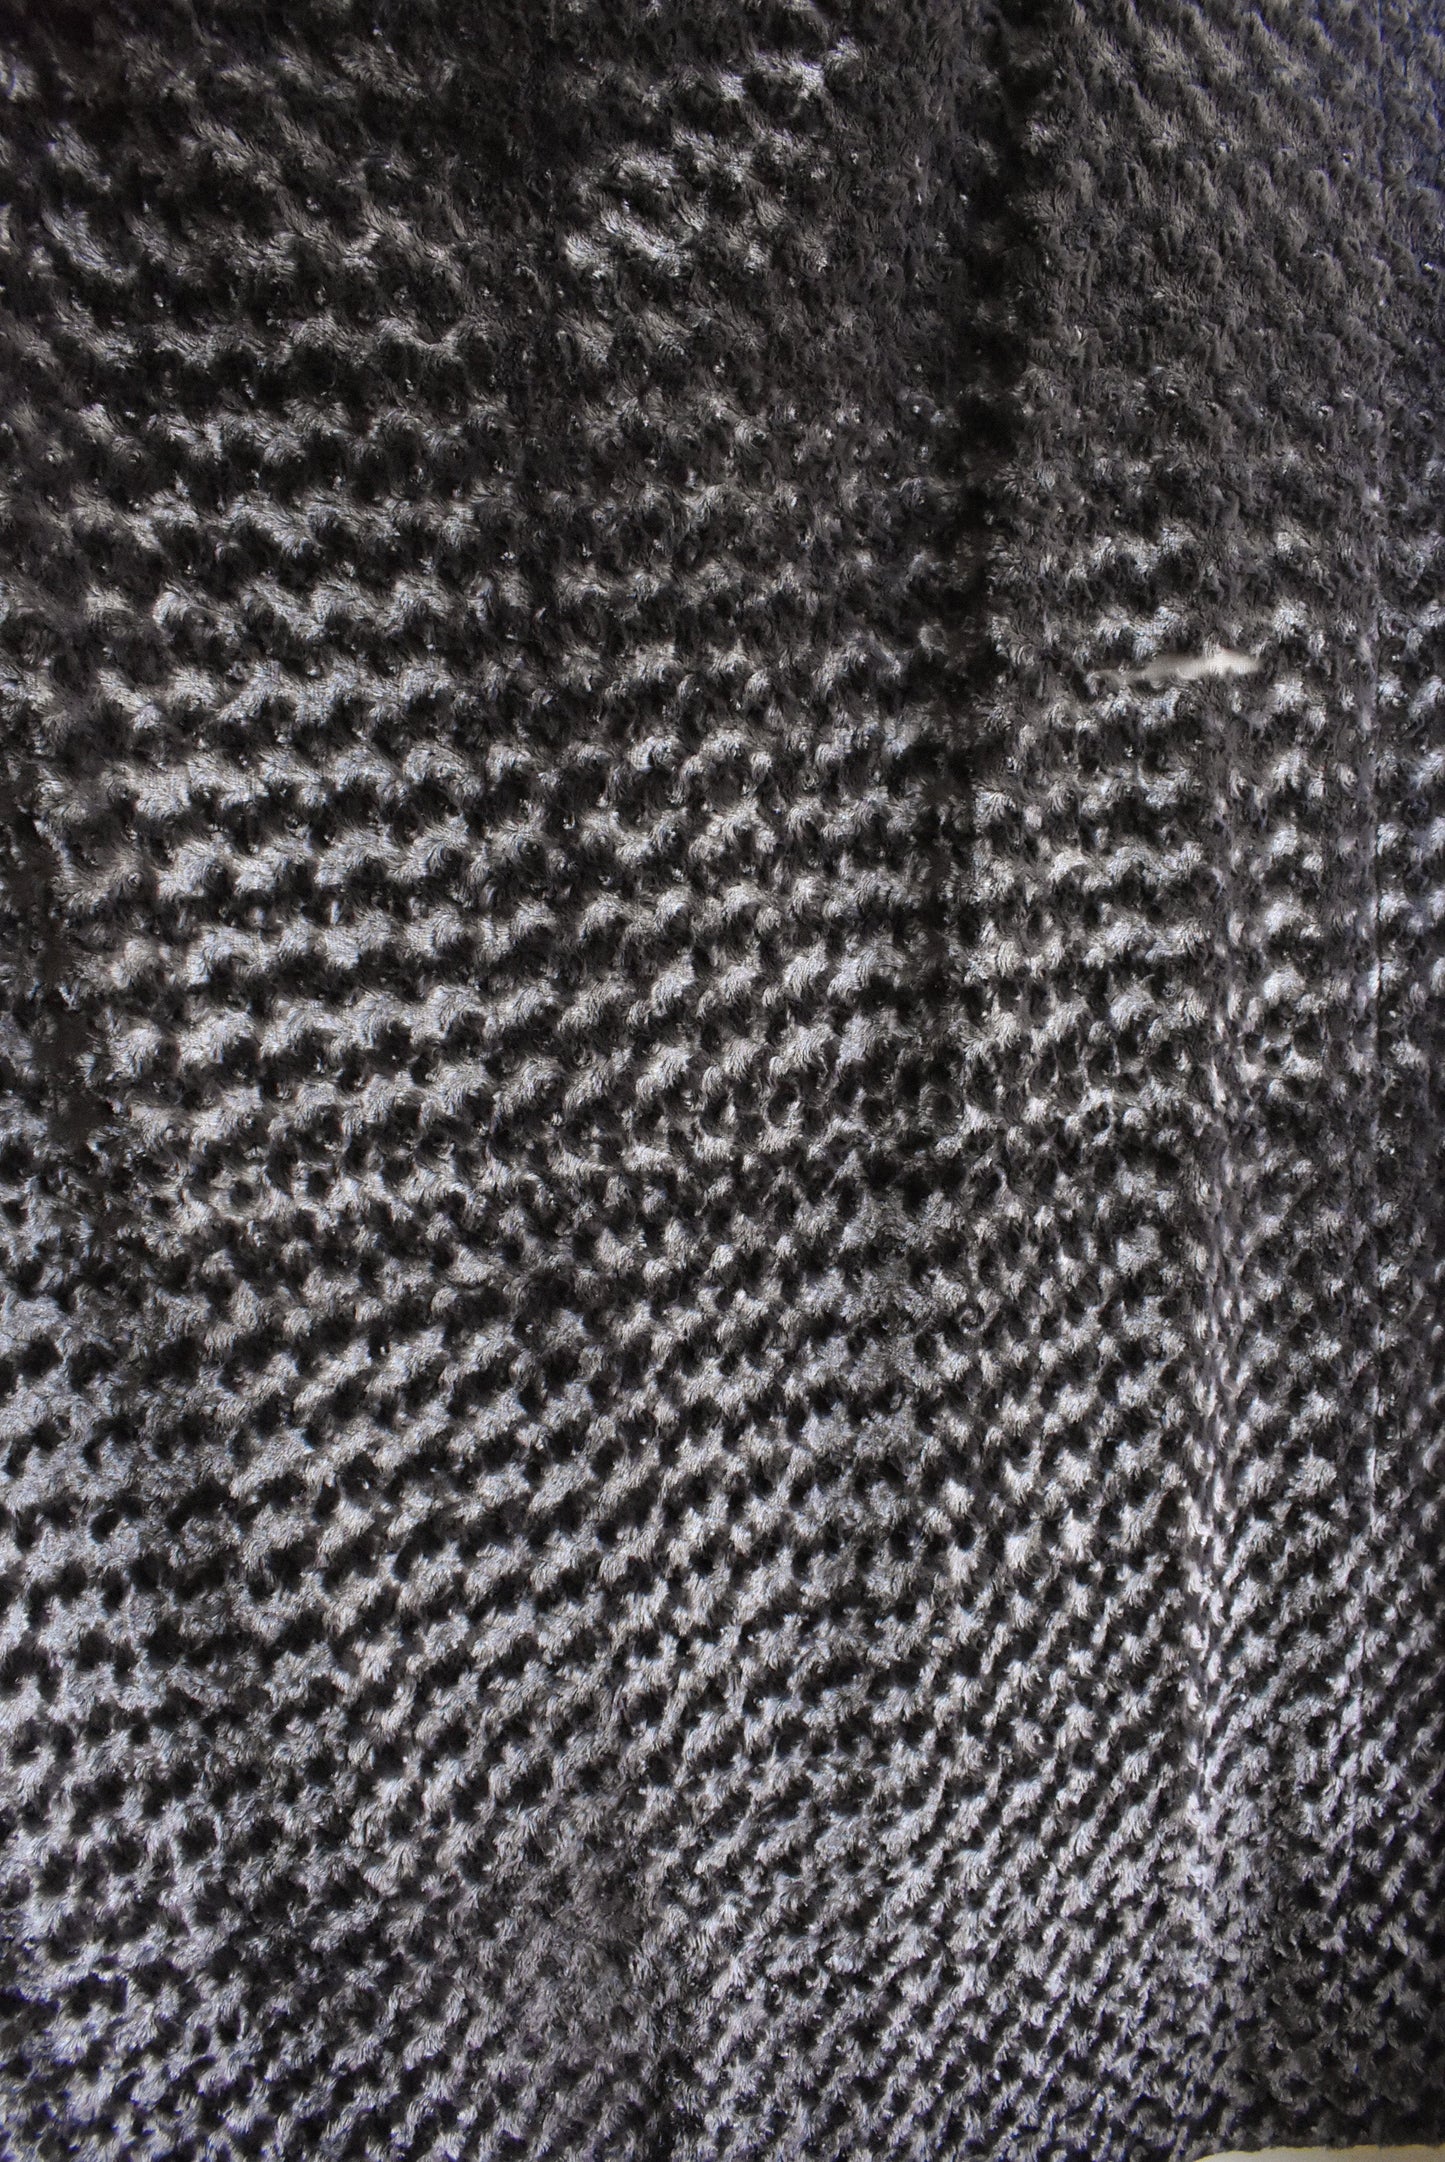 Fluffy dark grey blanket